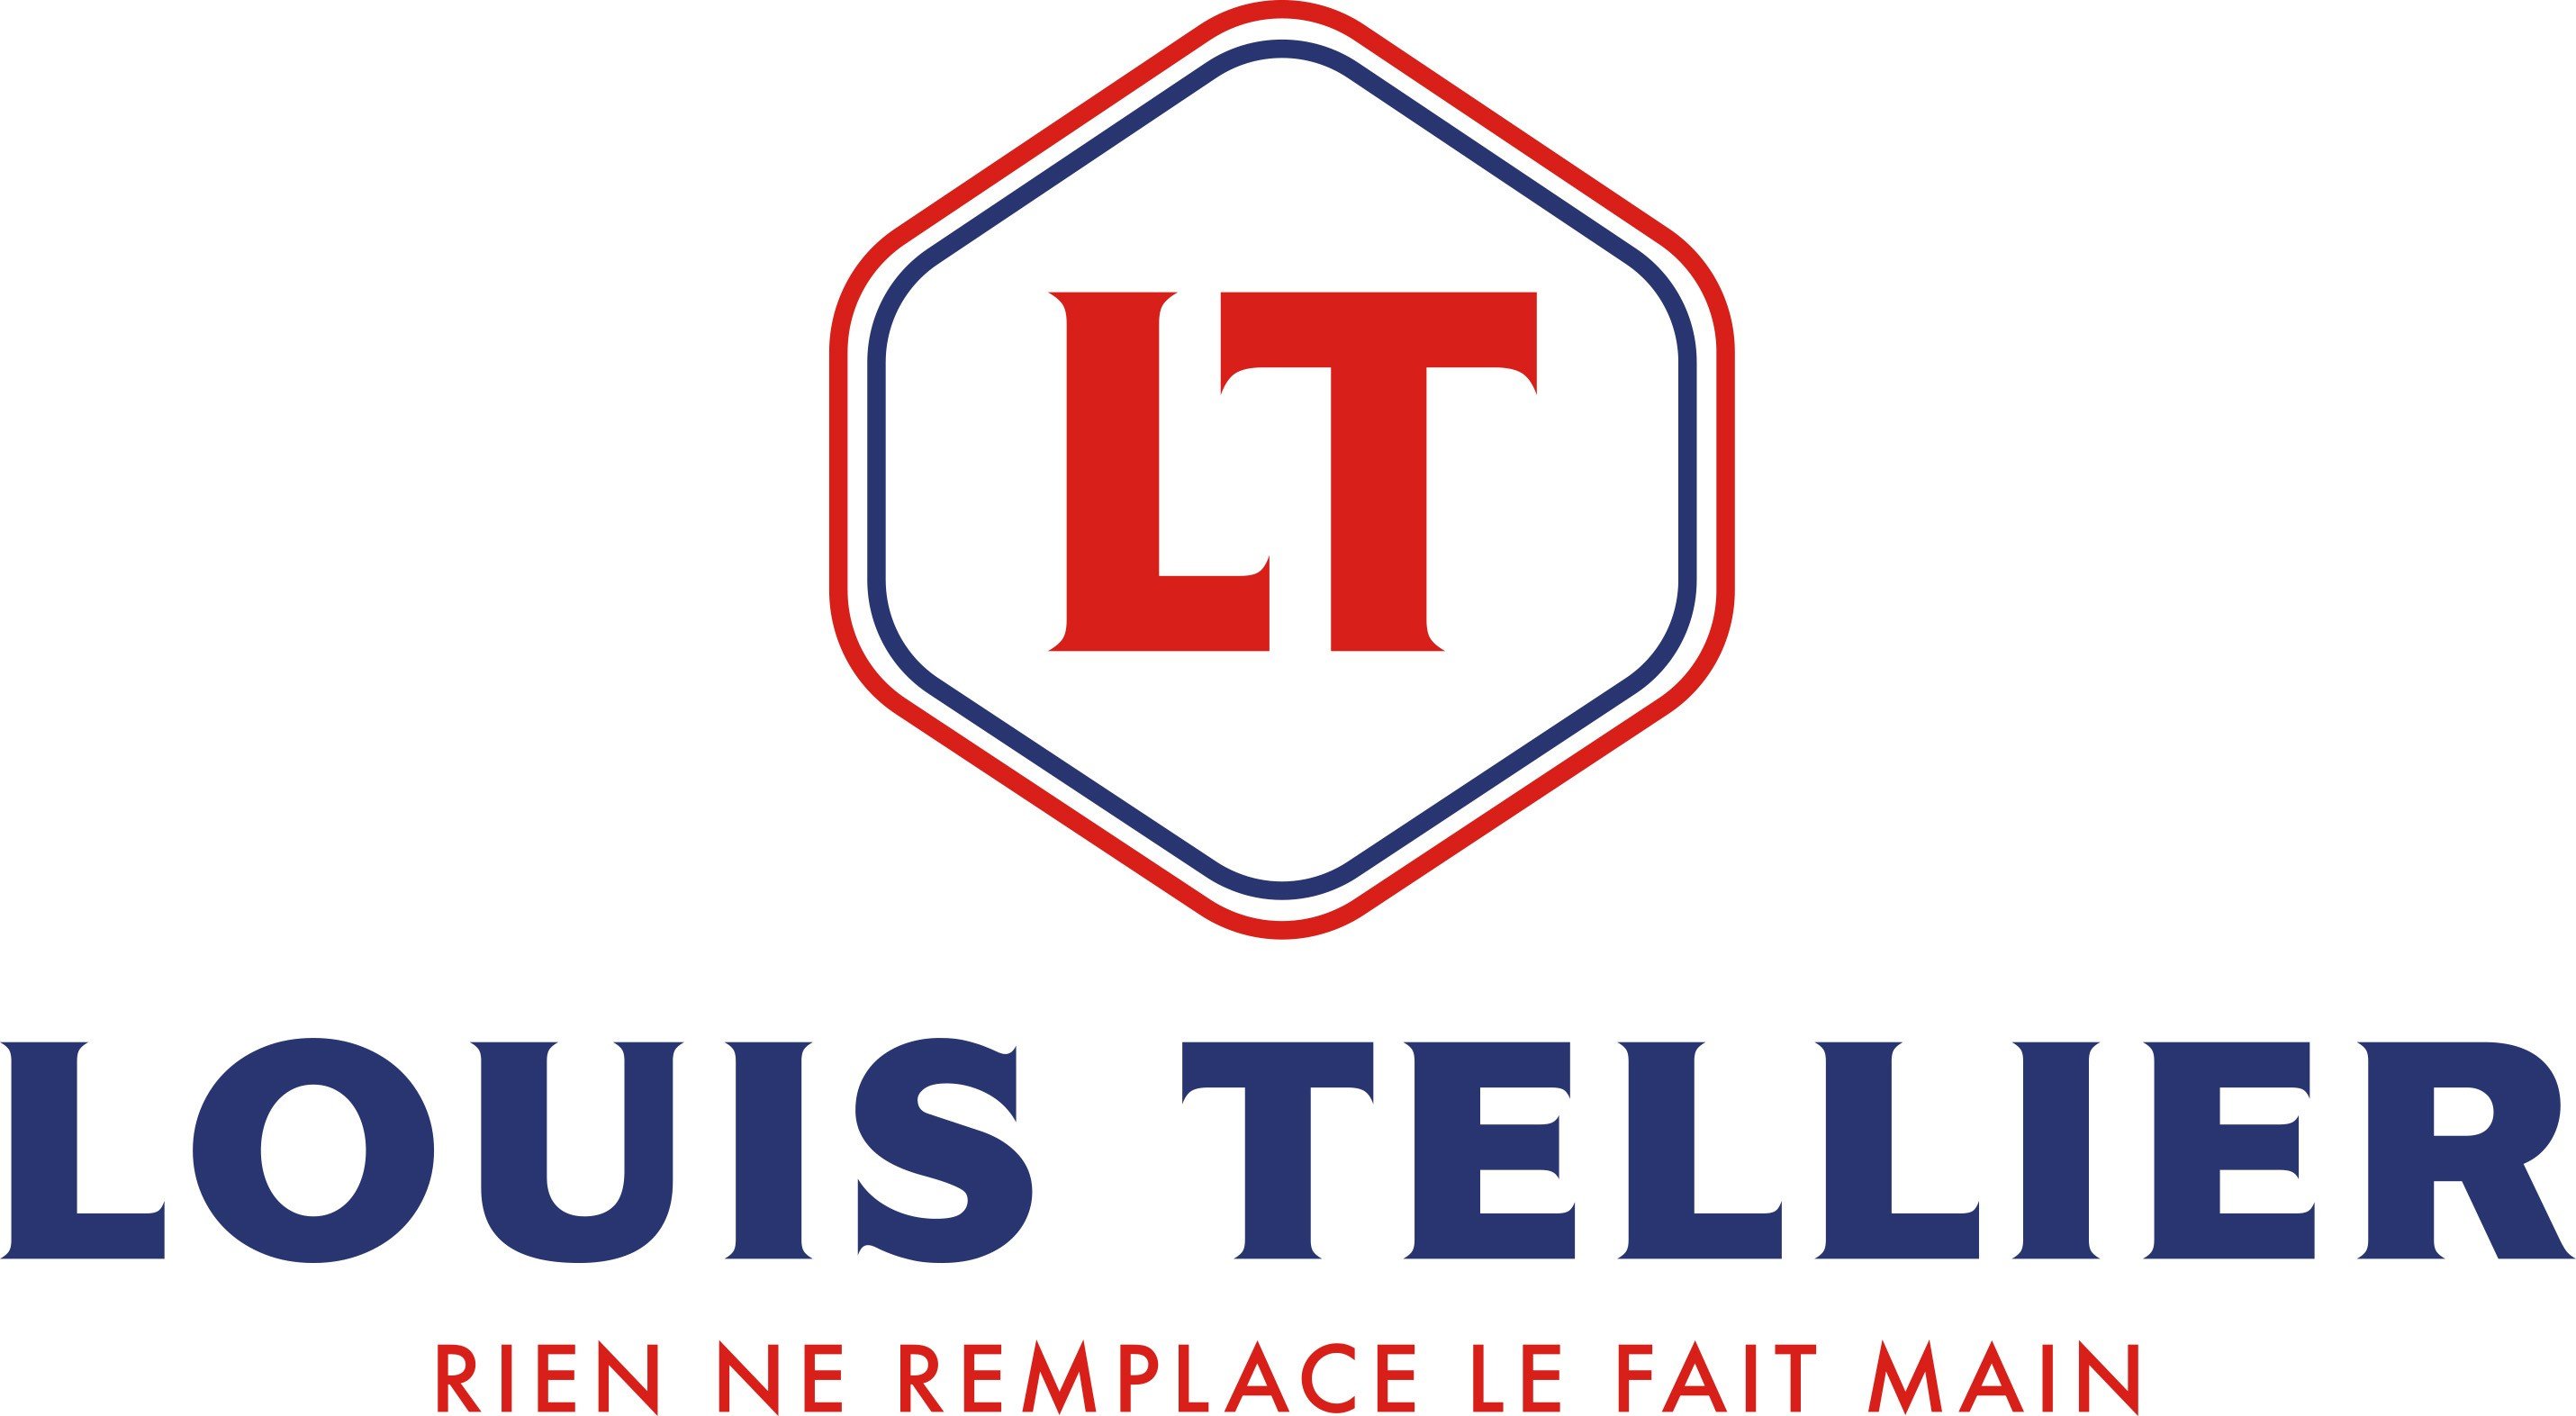 Louis Tellier